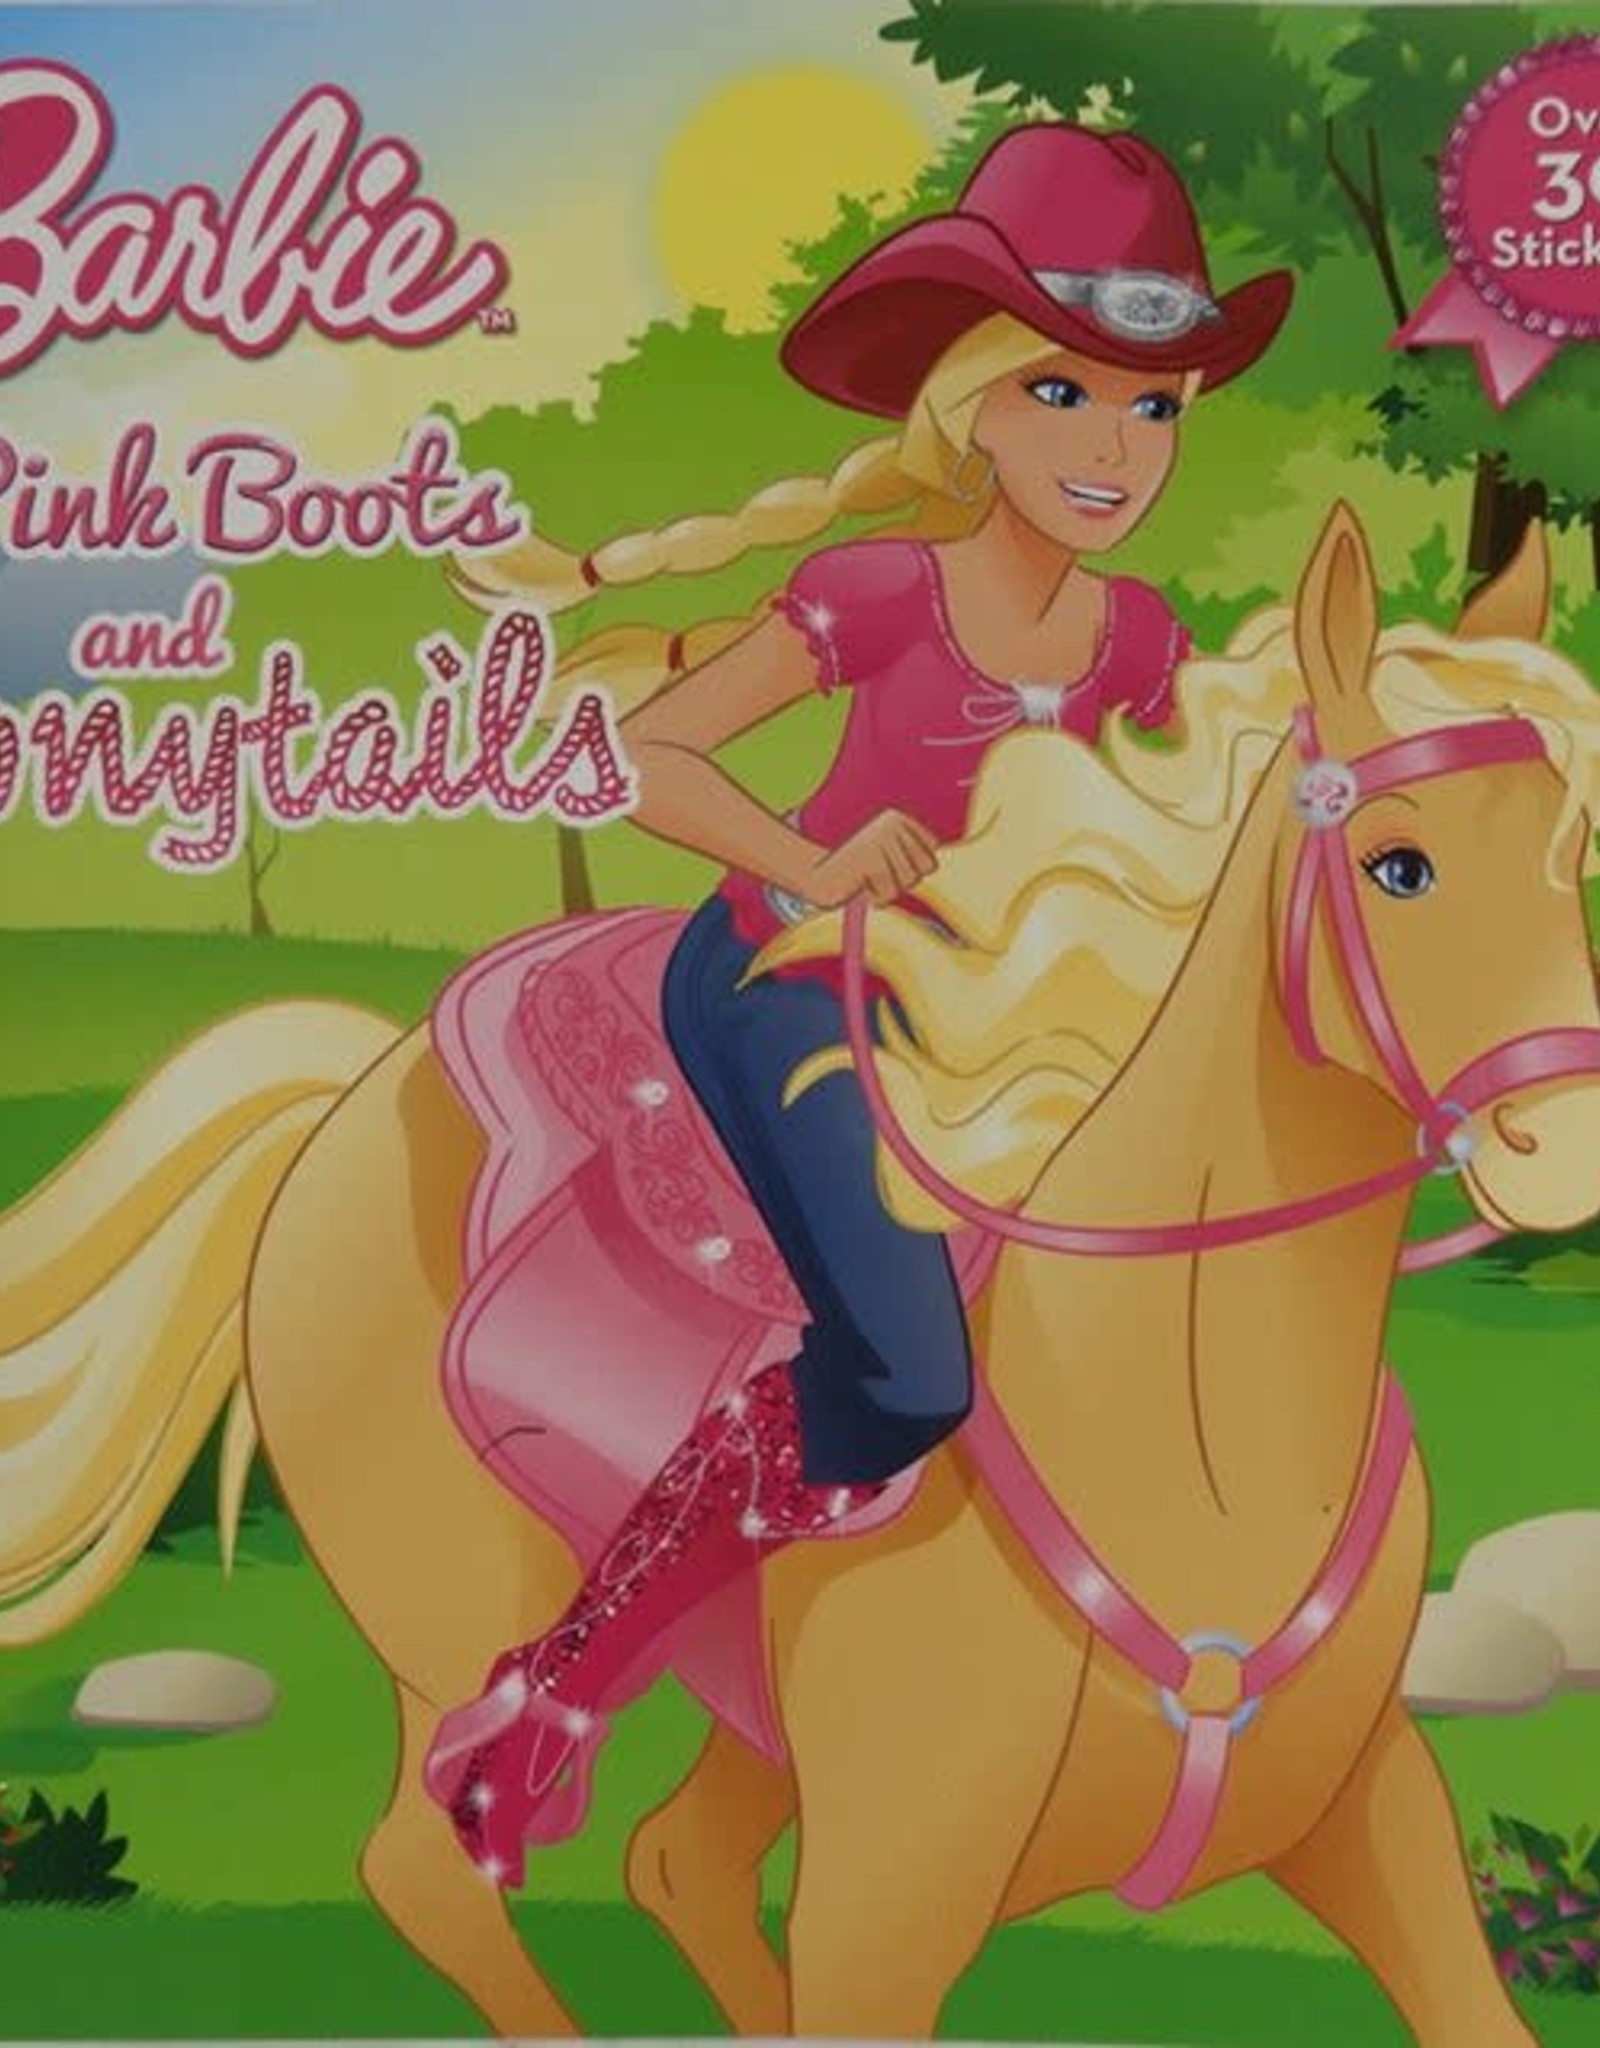 Barbie Pink Boots an Ponytails Sticker Book